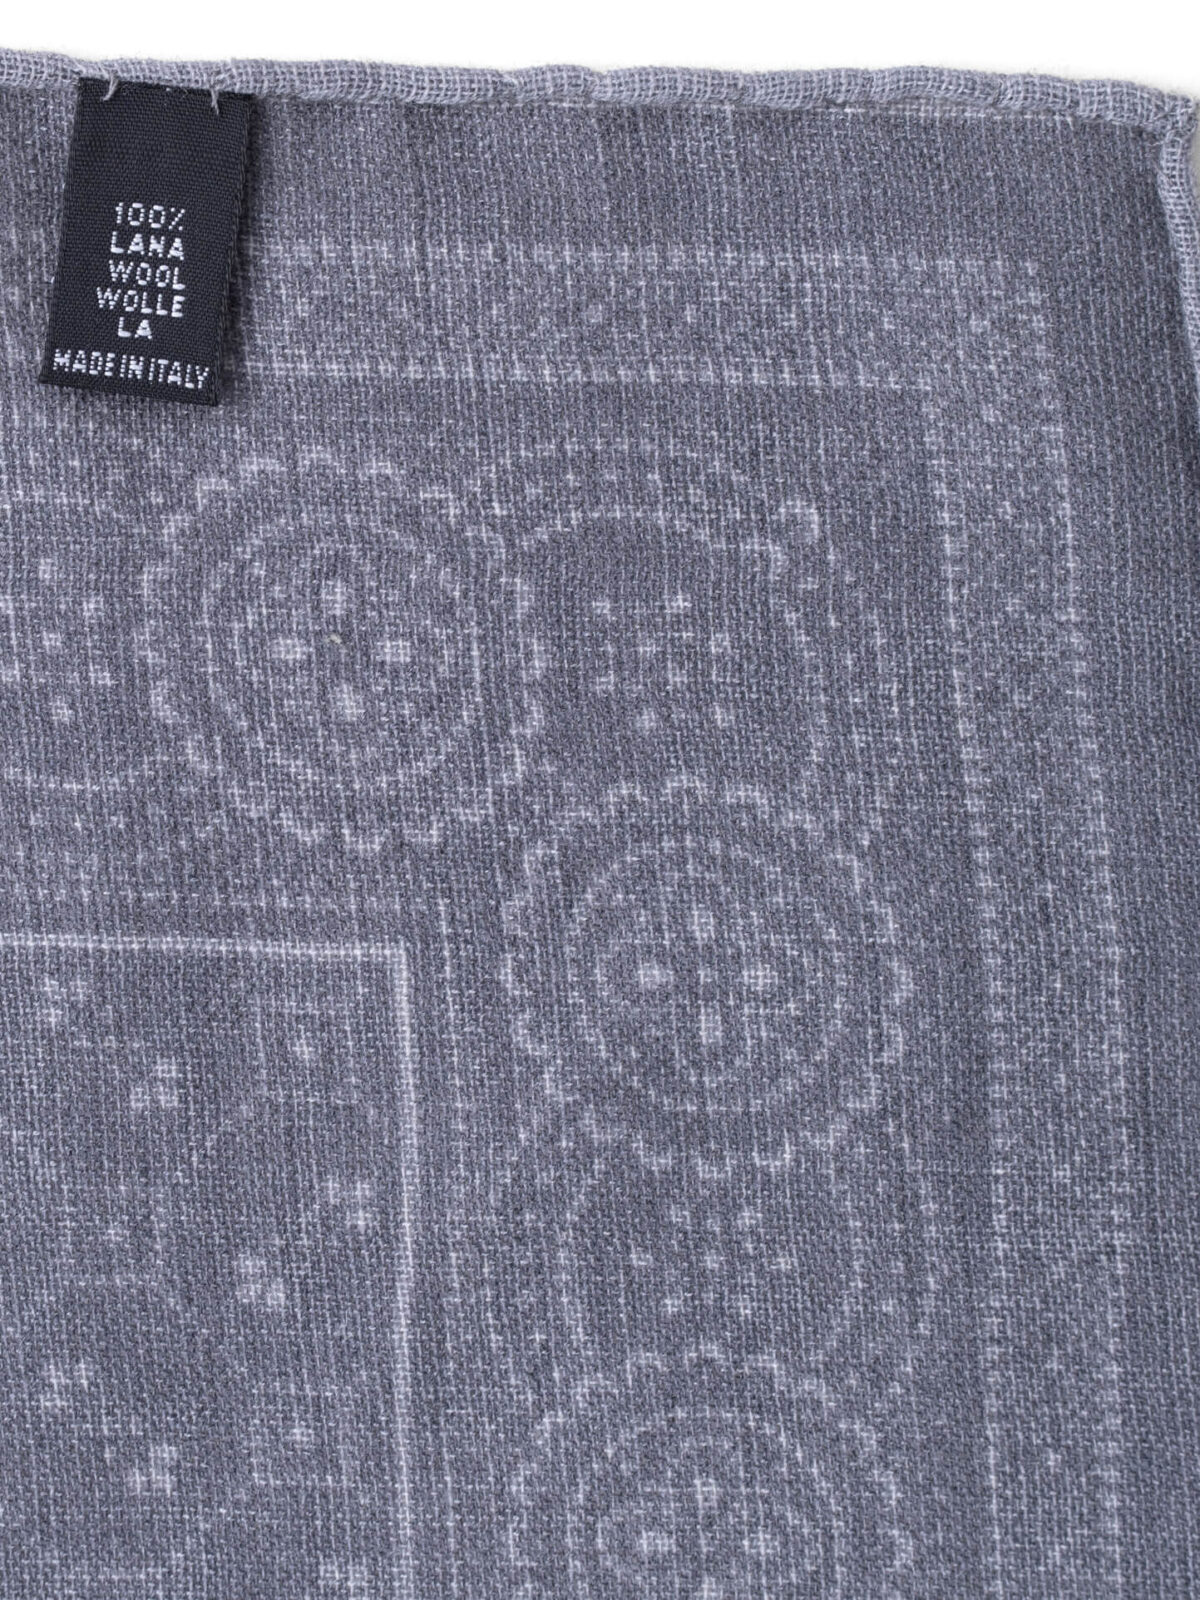 Grey Bandana Print Wool Pocket Square